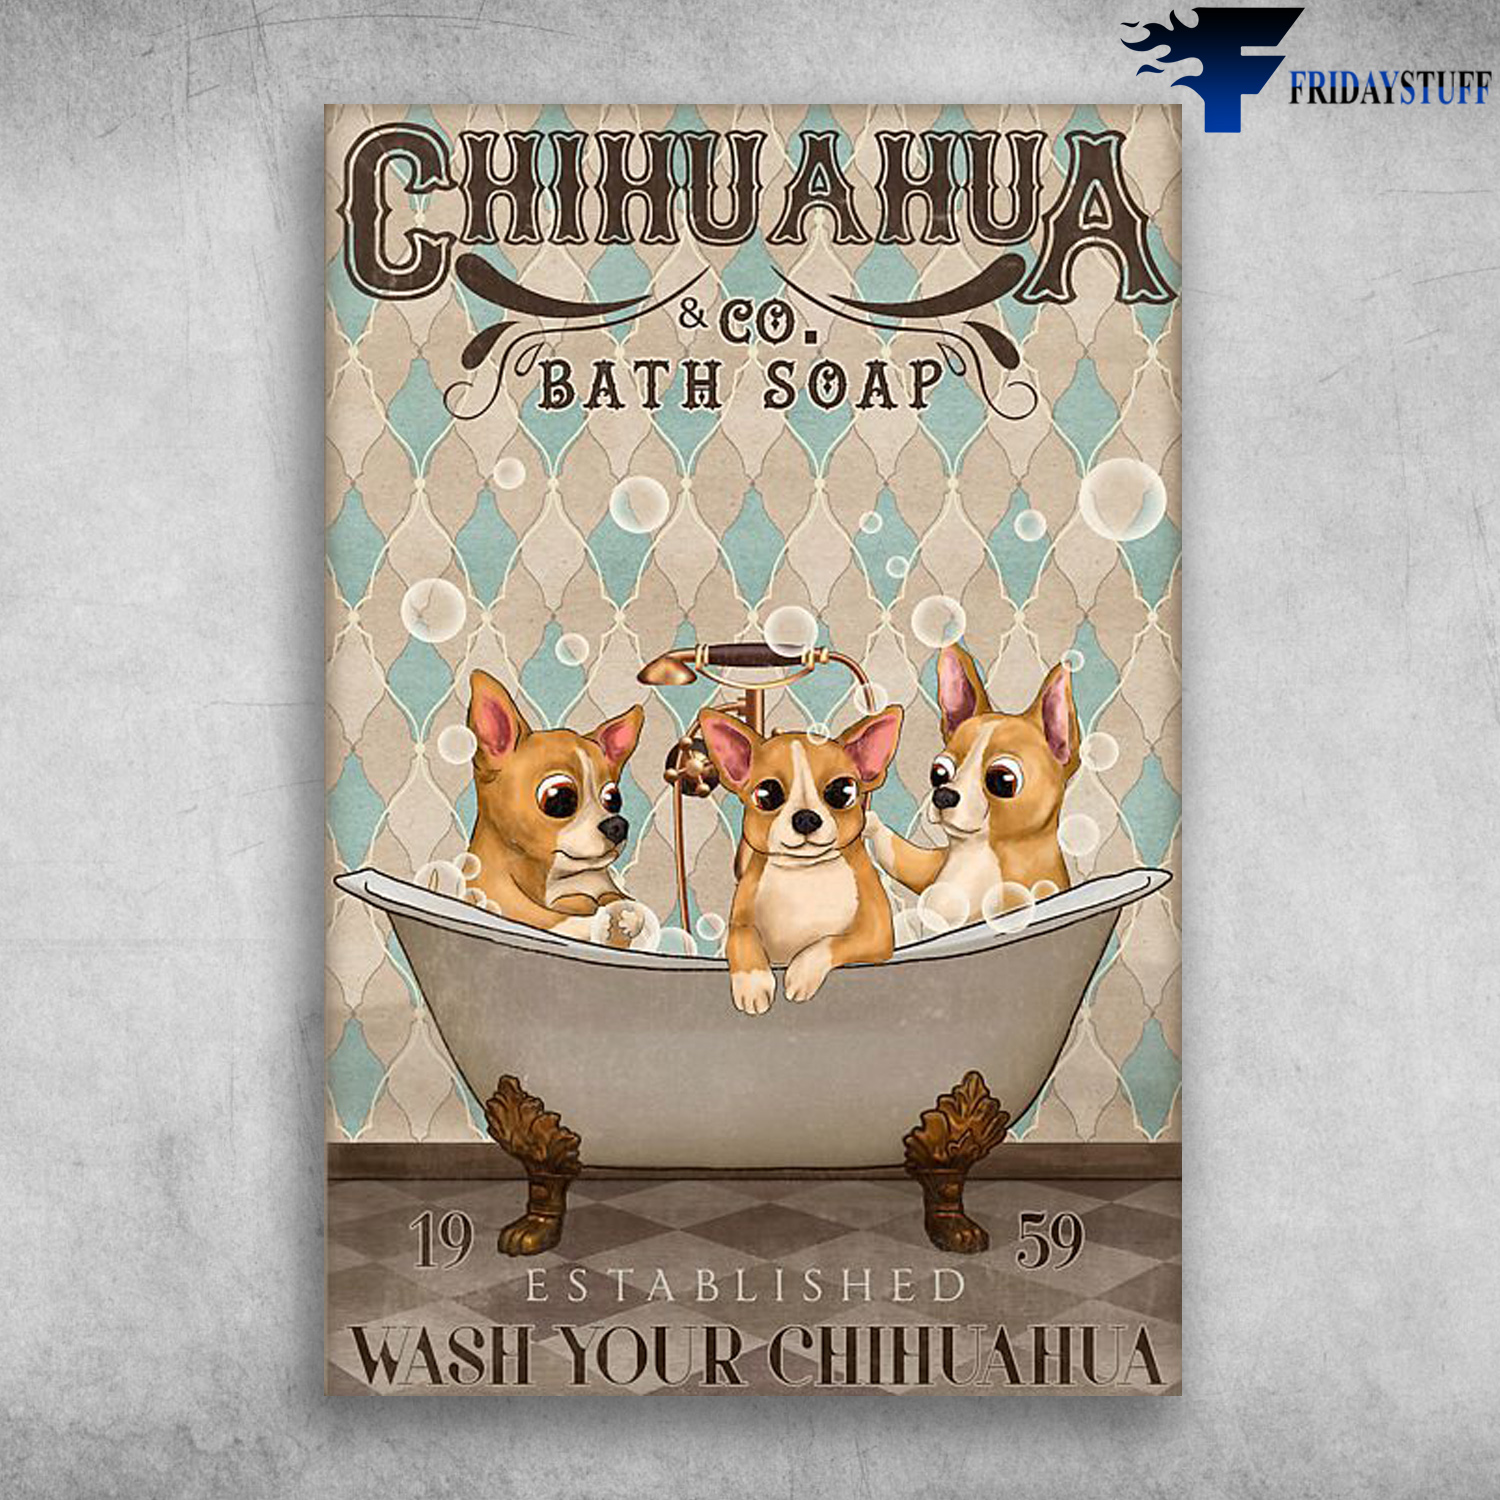 Chihuahua Dog In The Bath - Chihuahua And Co. Bath Soap, 19 Established , Wash Your Chihuahua